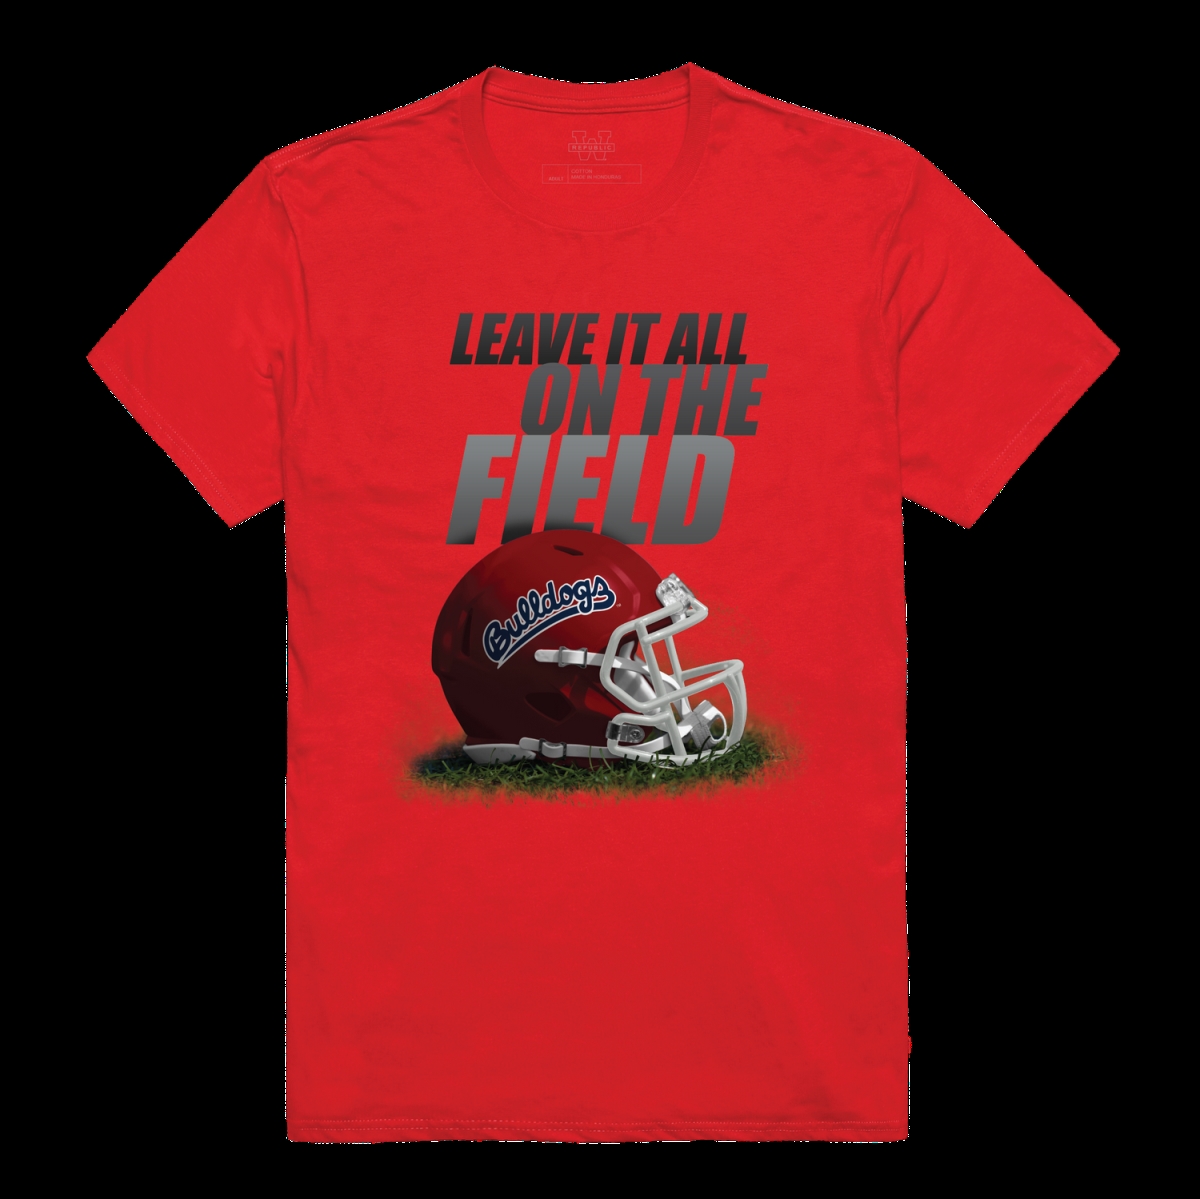 524-169-RED-02 California State University, Fresno Bulldogs Gridiron T-Shirt, Red - Medium -  W Republic